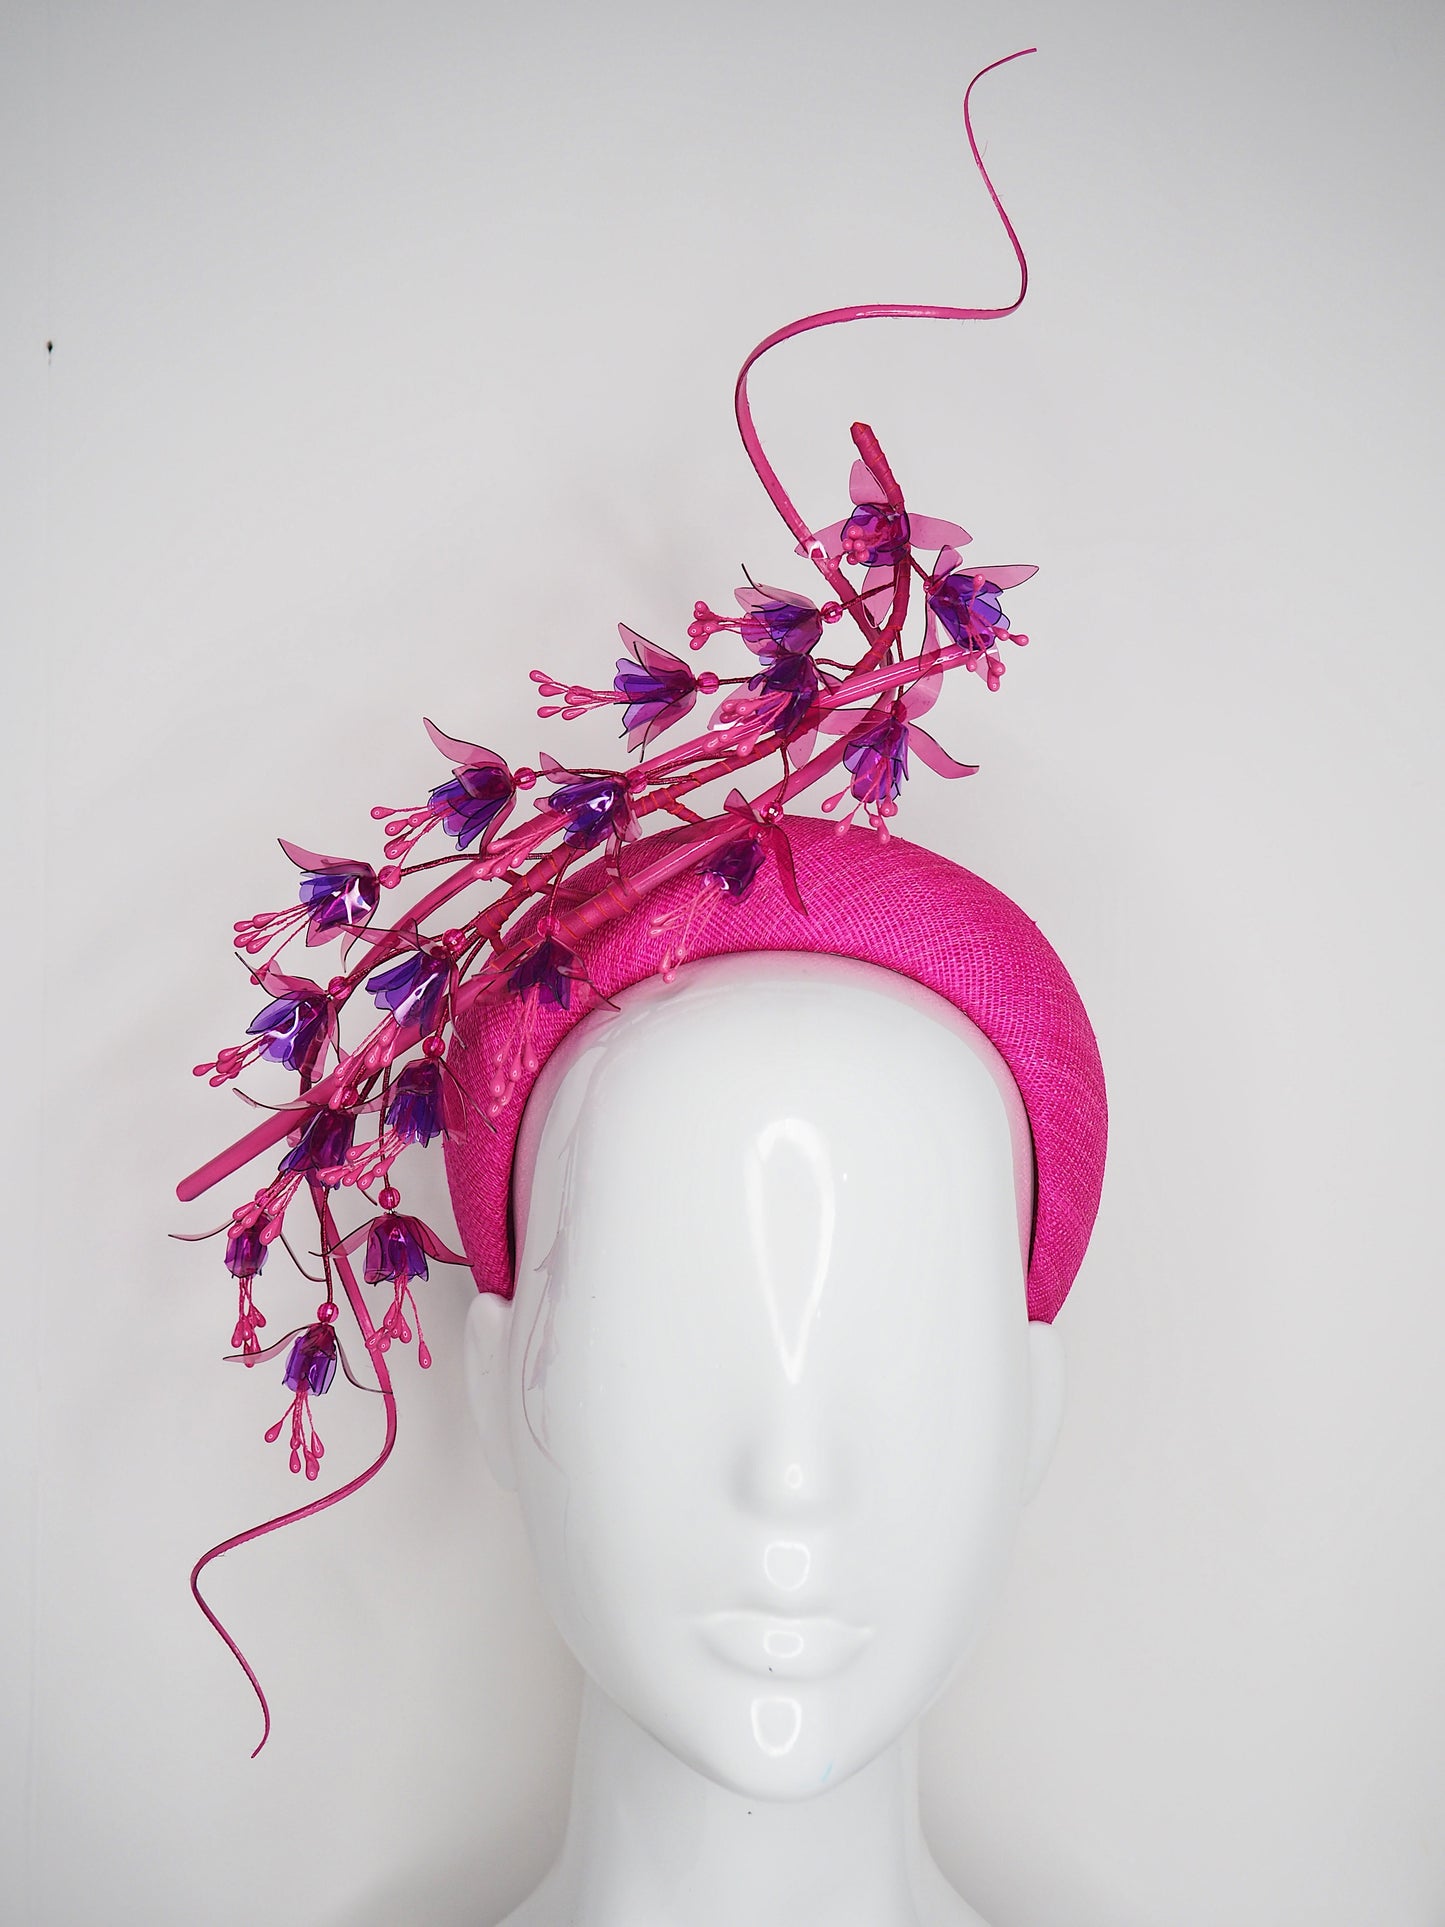 Fuchsia Flash - Hot Pink 3d headband with a cascade of Dancing fuchsia flowers